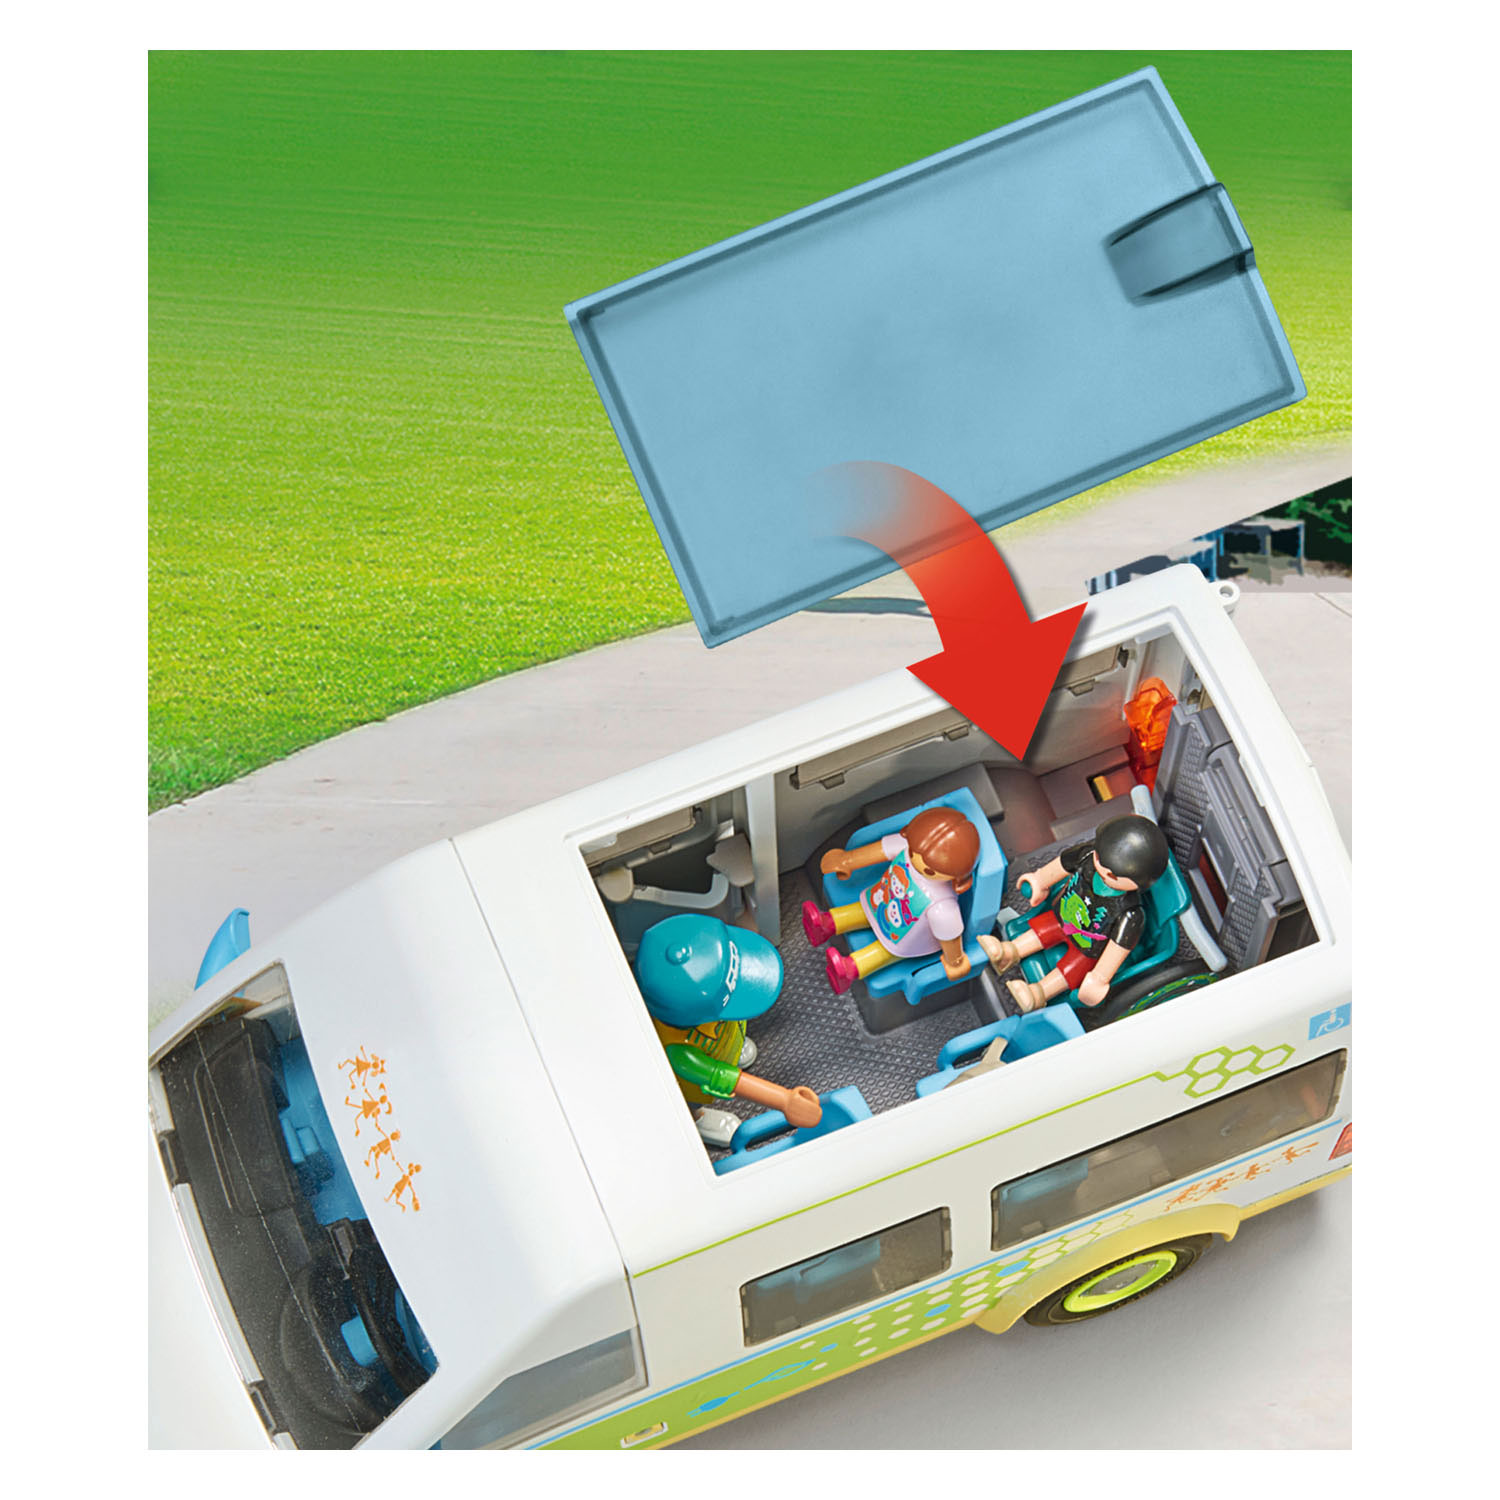 Playmobil City Life Schoolbus - 71329